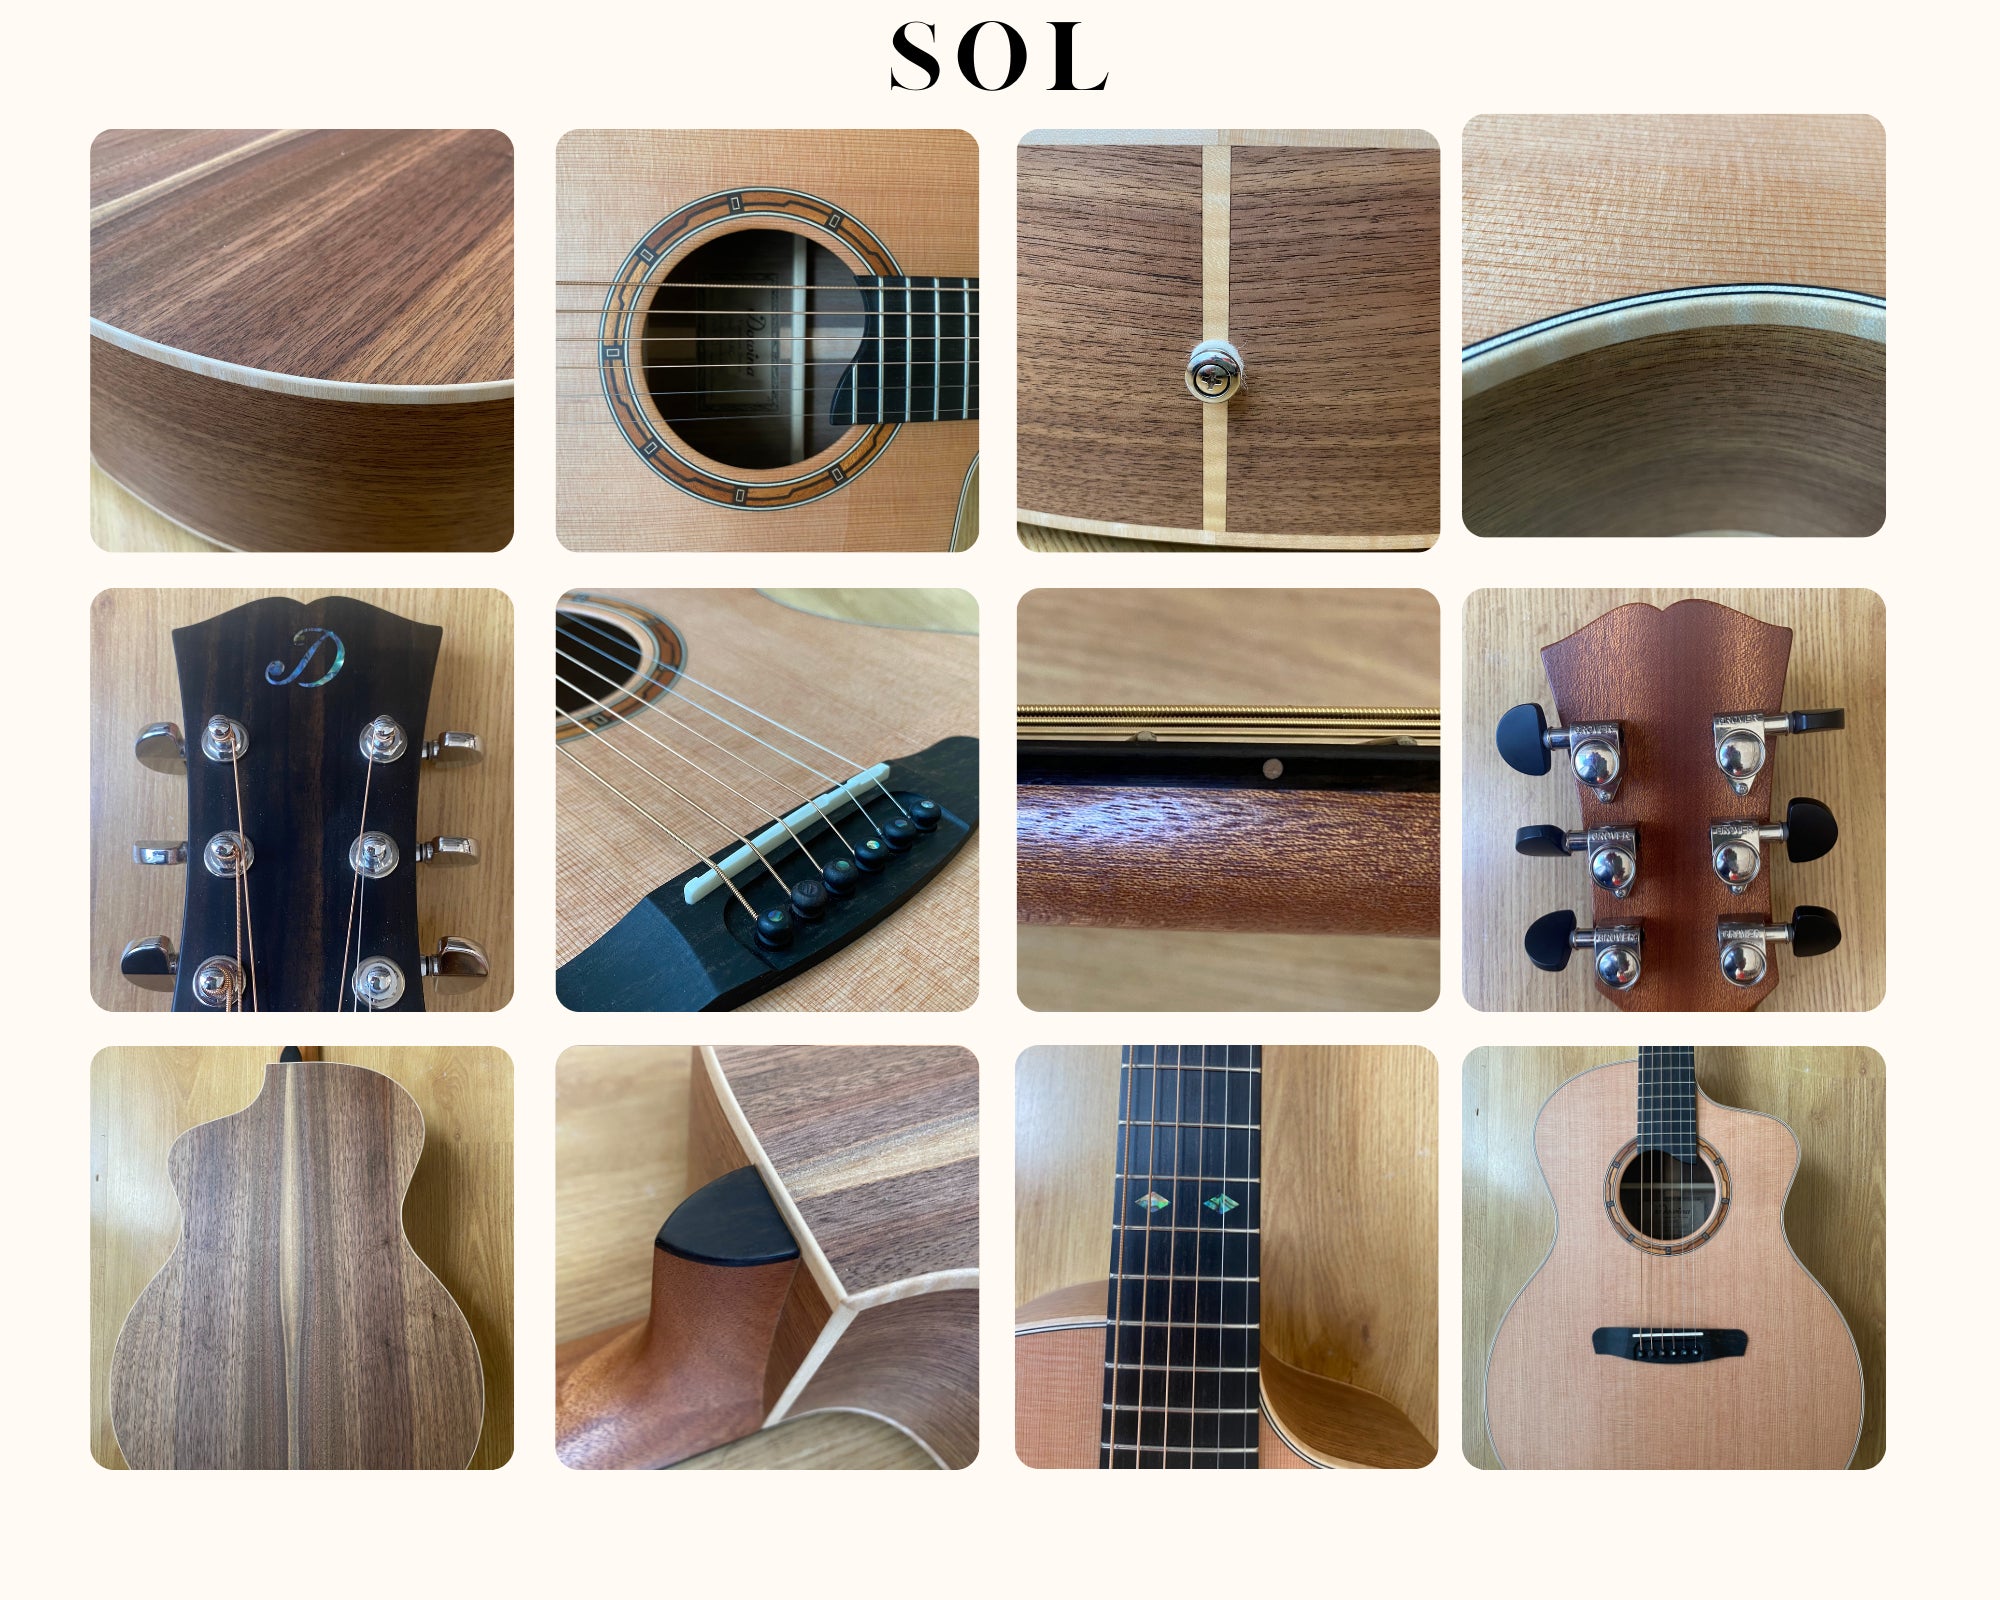 Dowina Walnut (Sol)  GAC Left Handed, Acoustic Guitar for sale at Richards Guitars.